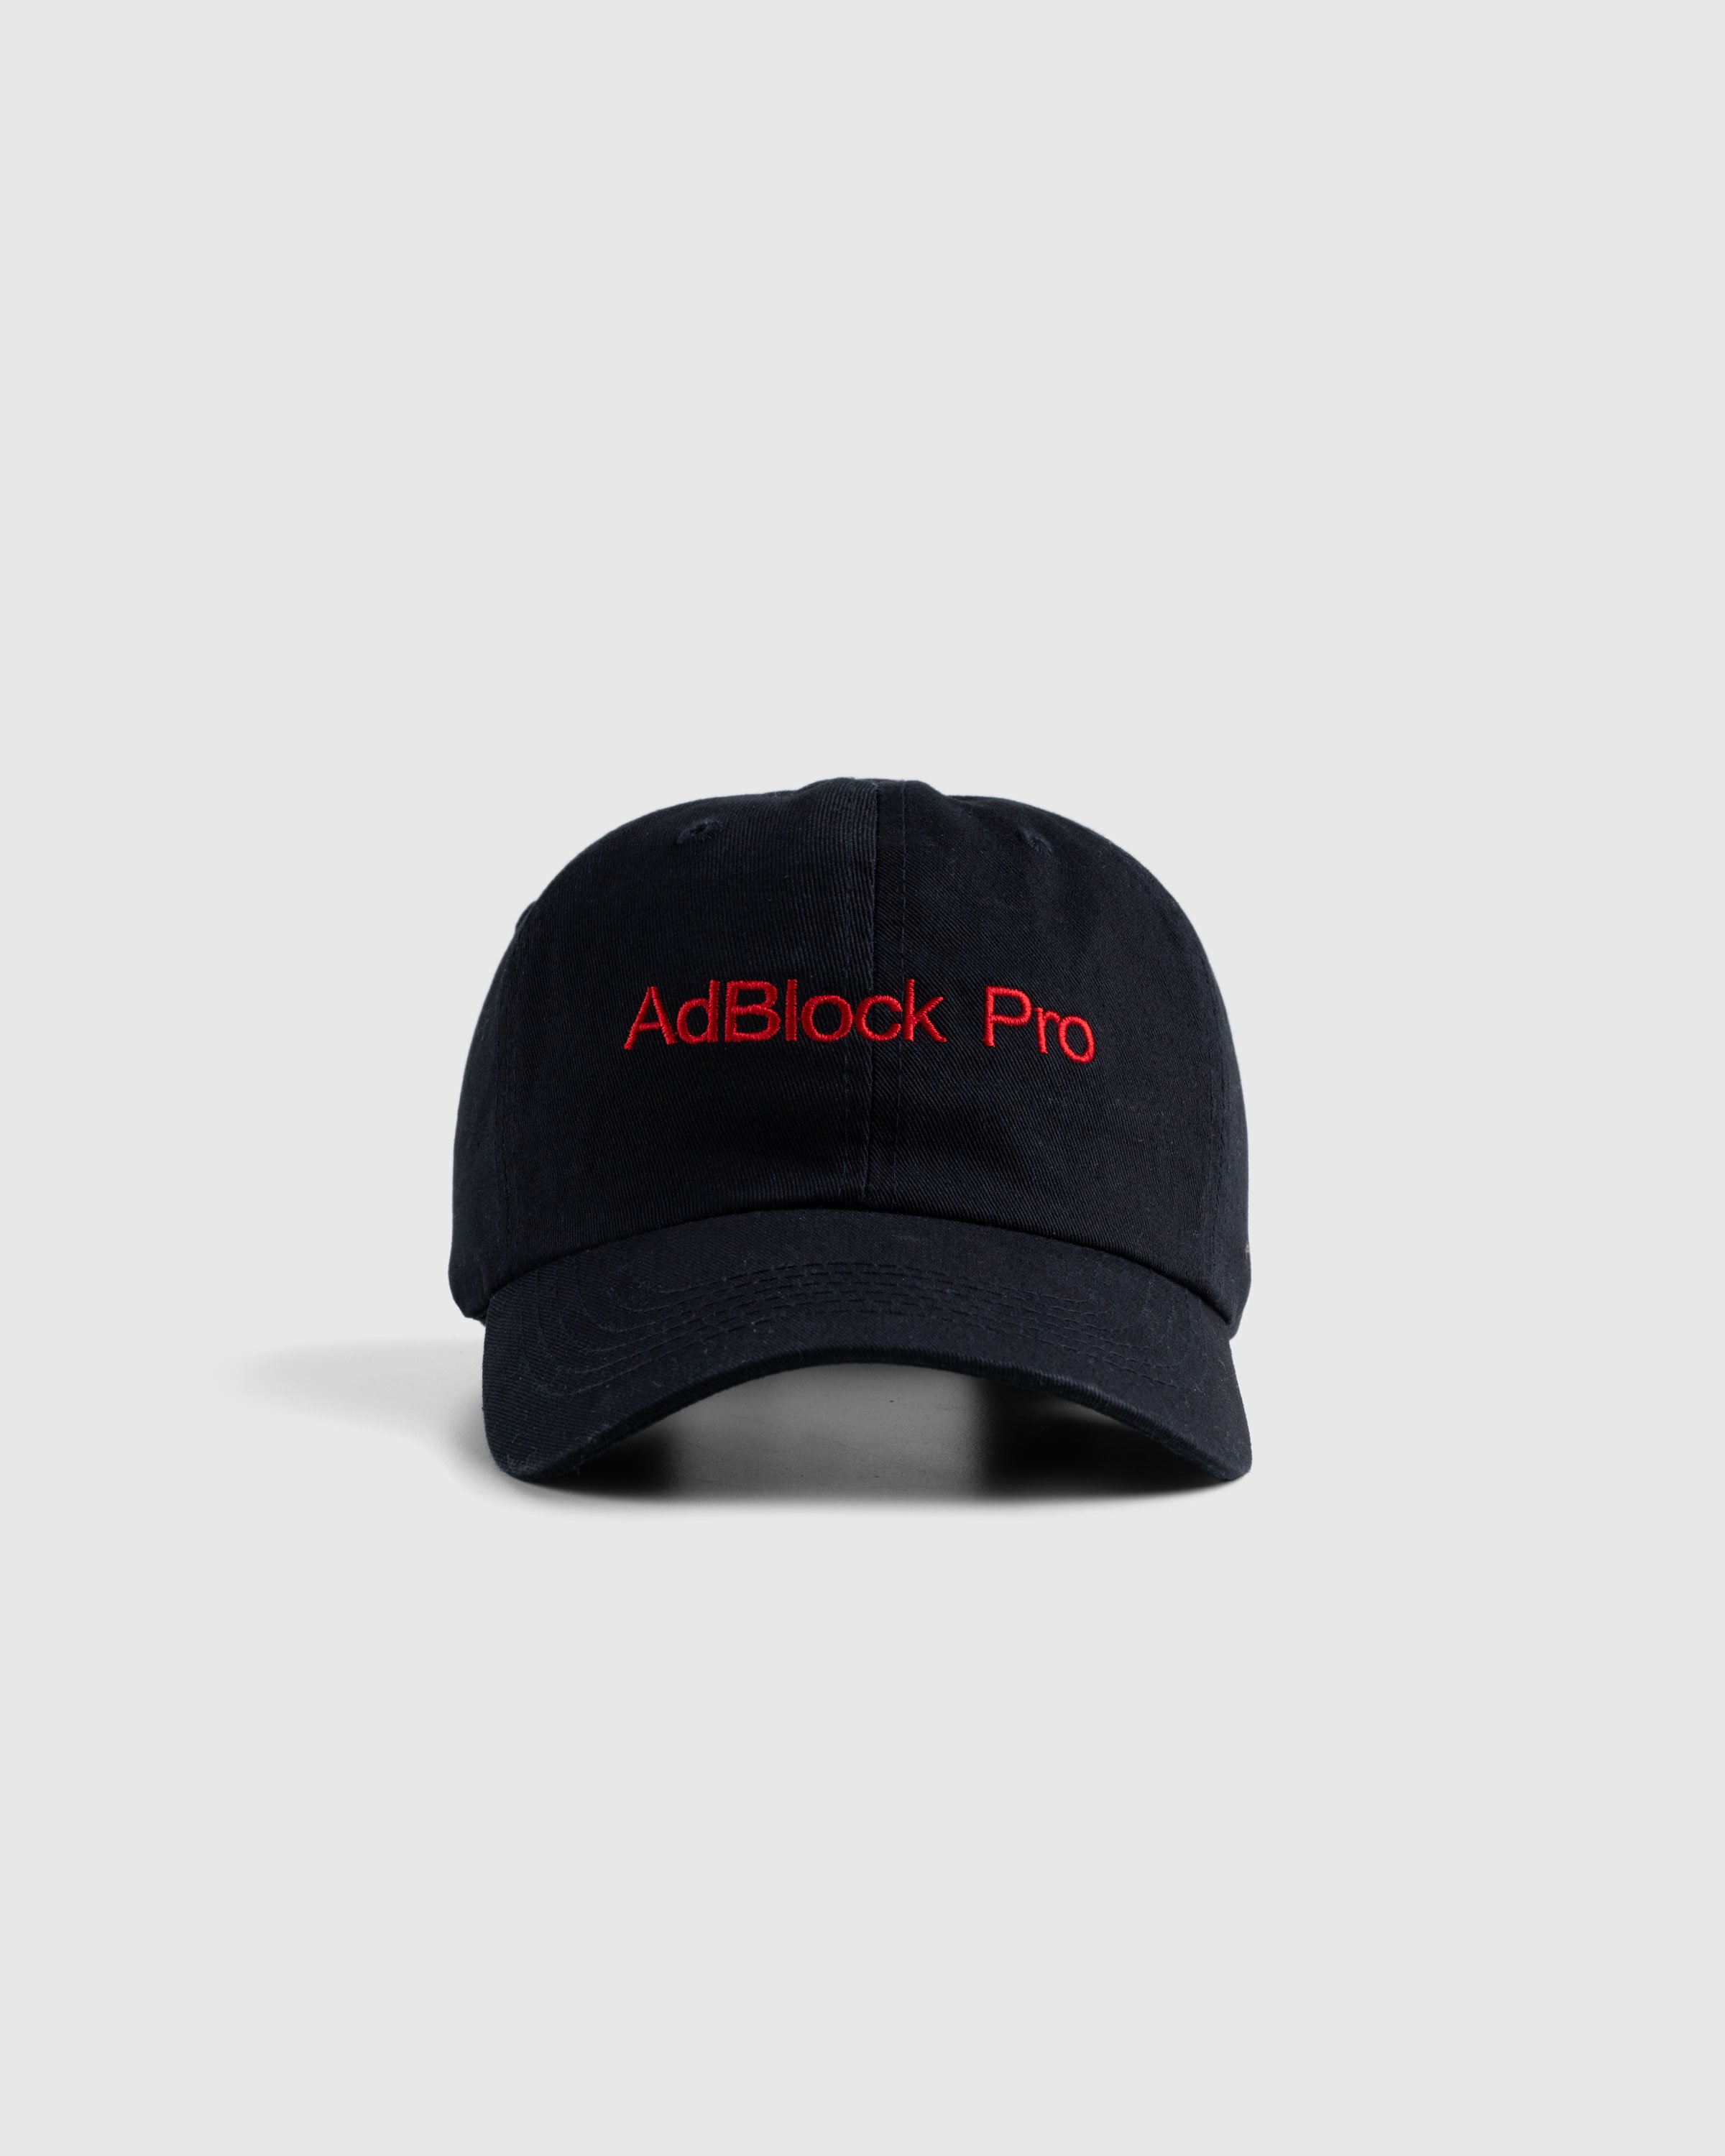 HO HO COCO - ADBLOCK PRO BLACK X RED - Accessories - Black - Image 2